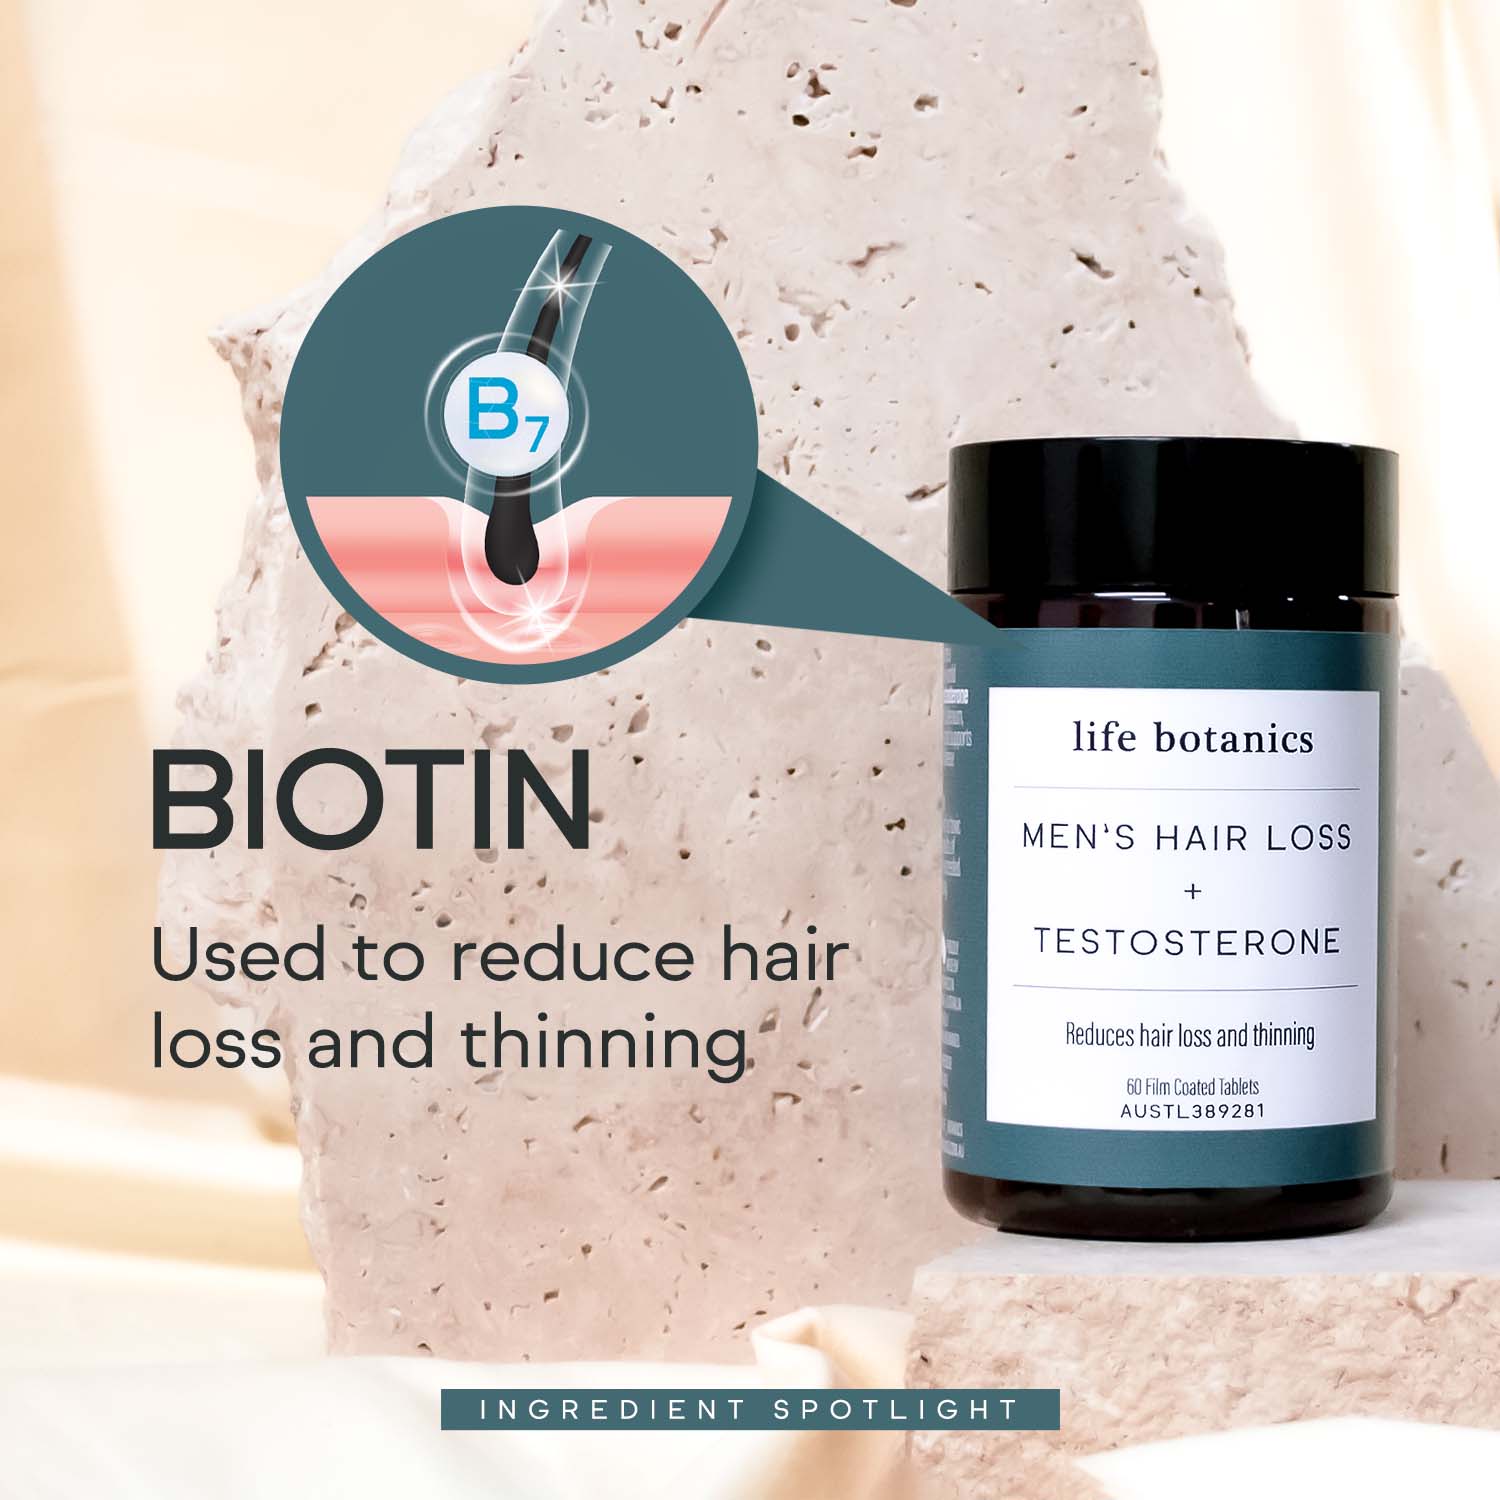 life botanics Men's Hair Loss + Testosterone Biotin 180